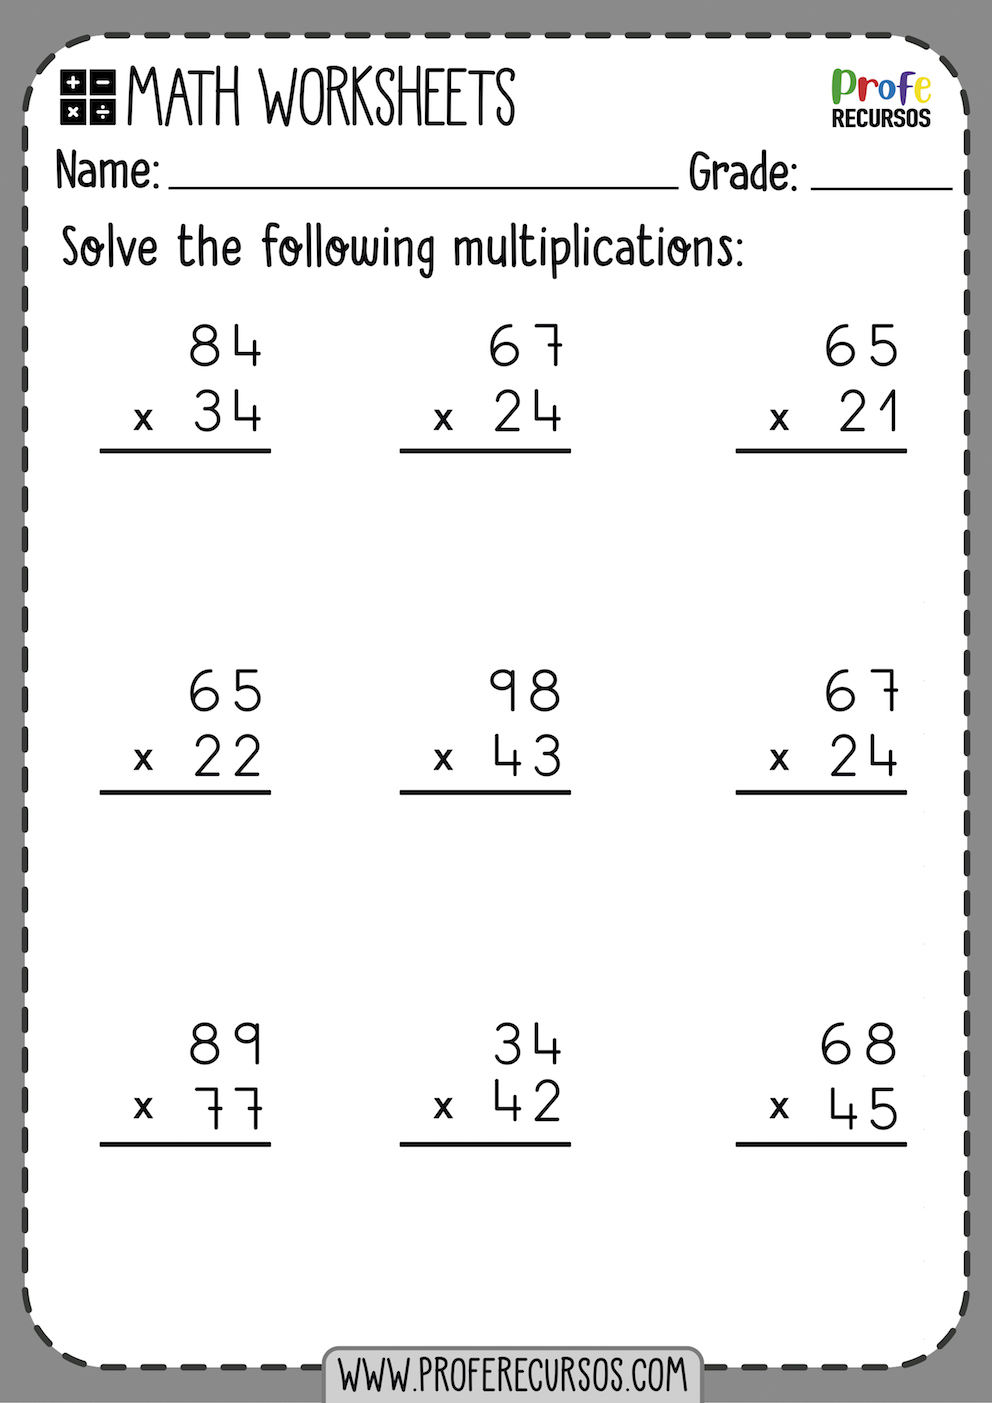 Multiplication worksheets PDF to Print